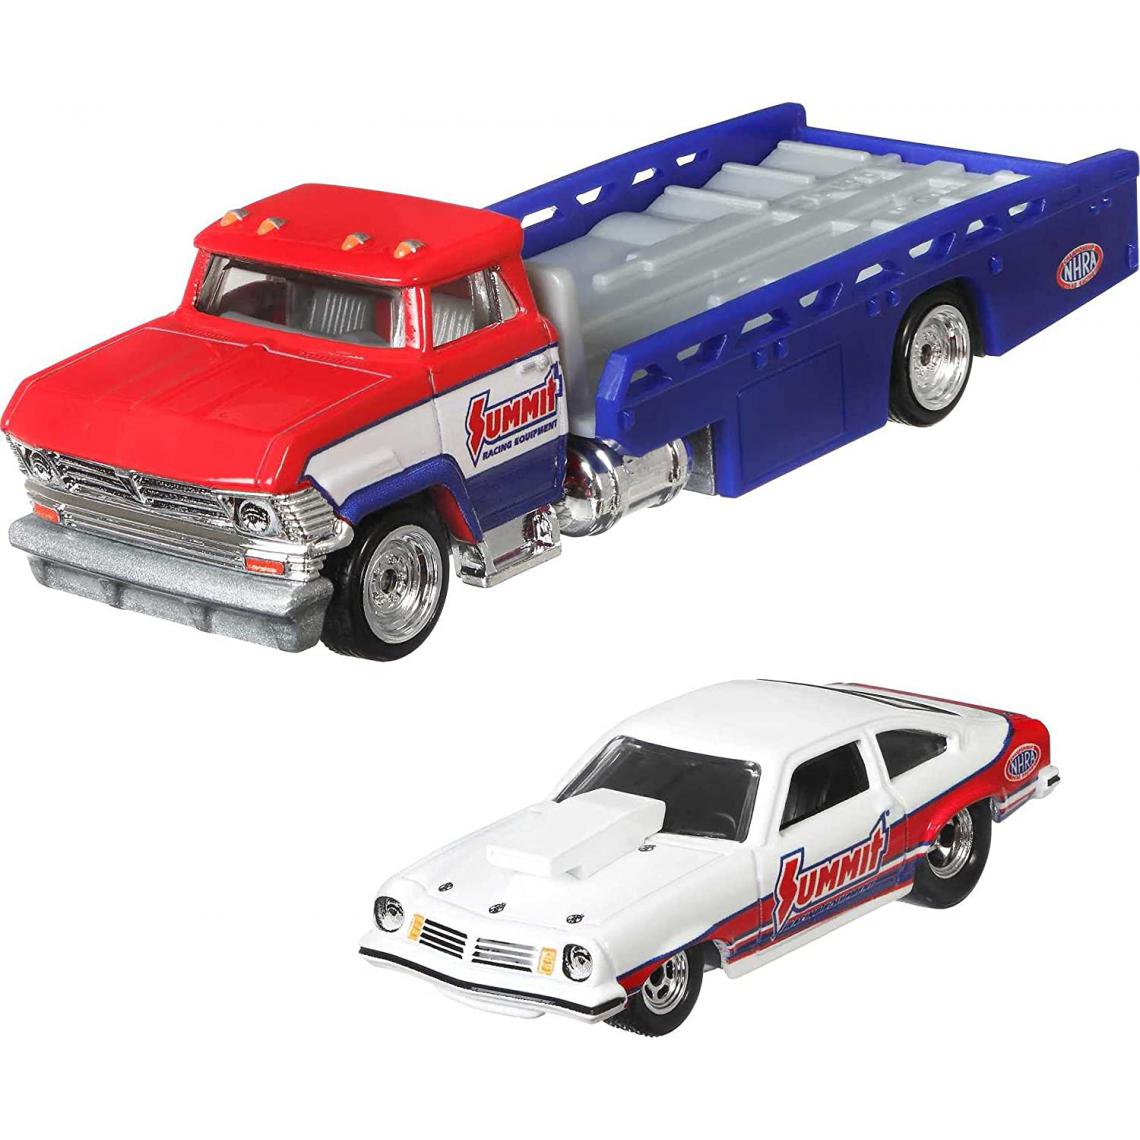 Hot Wheels - véhicule Team Transport Models and Component Car - Voiture de collection miniature